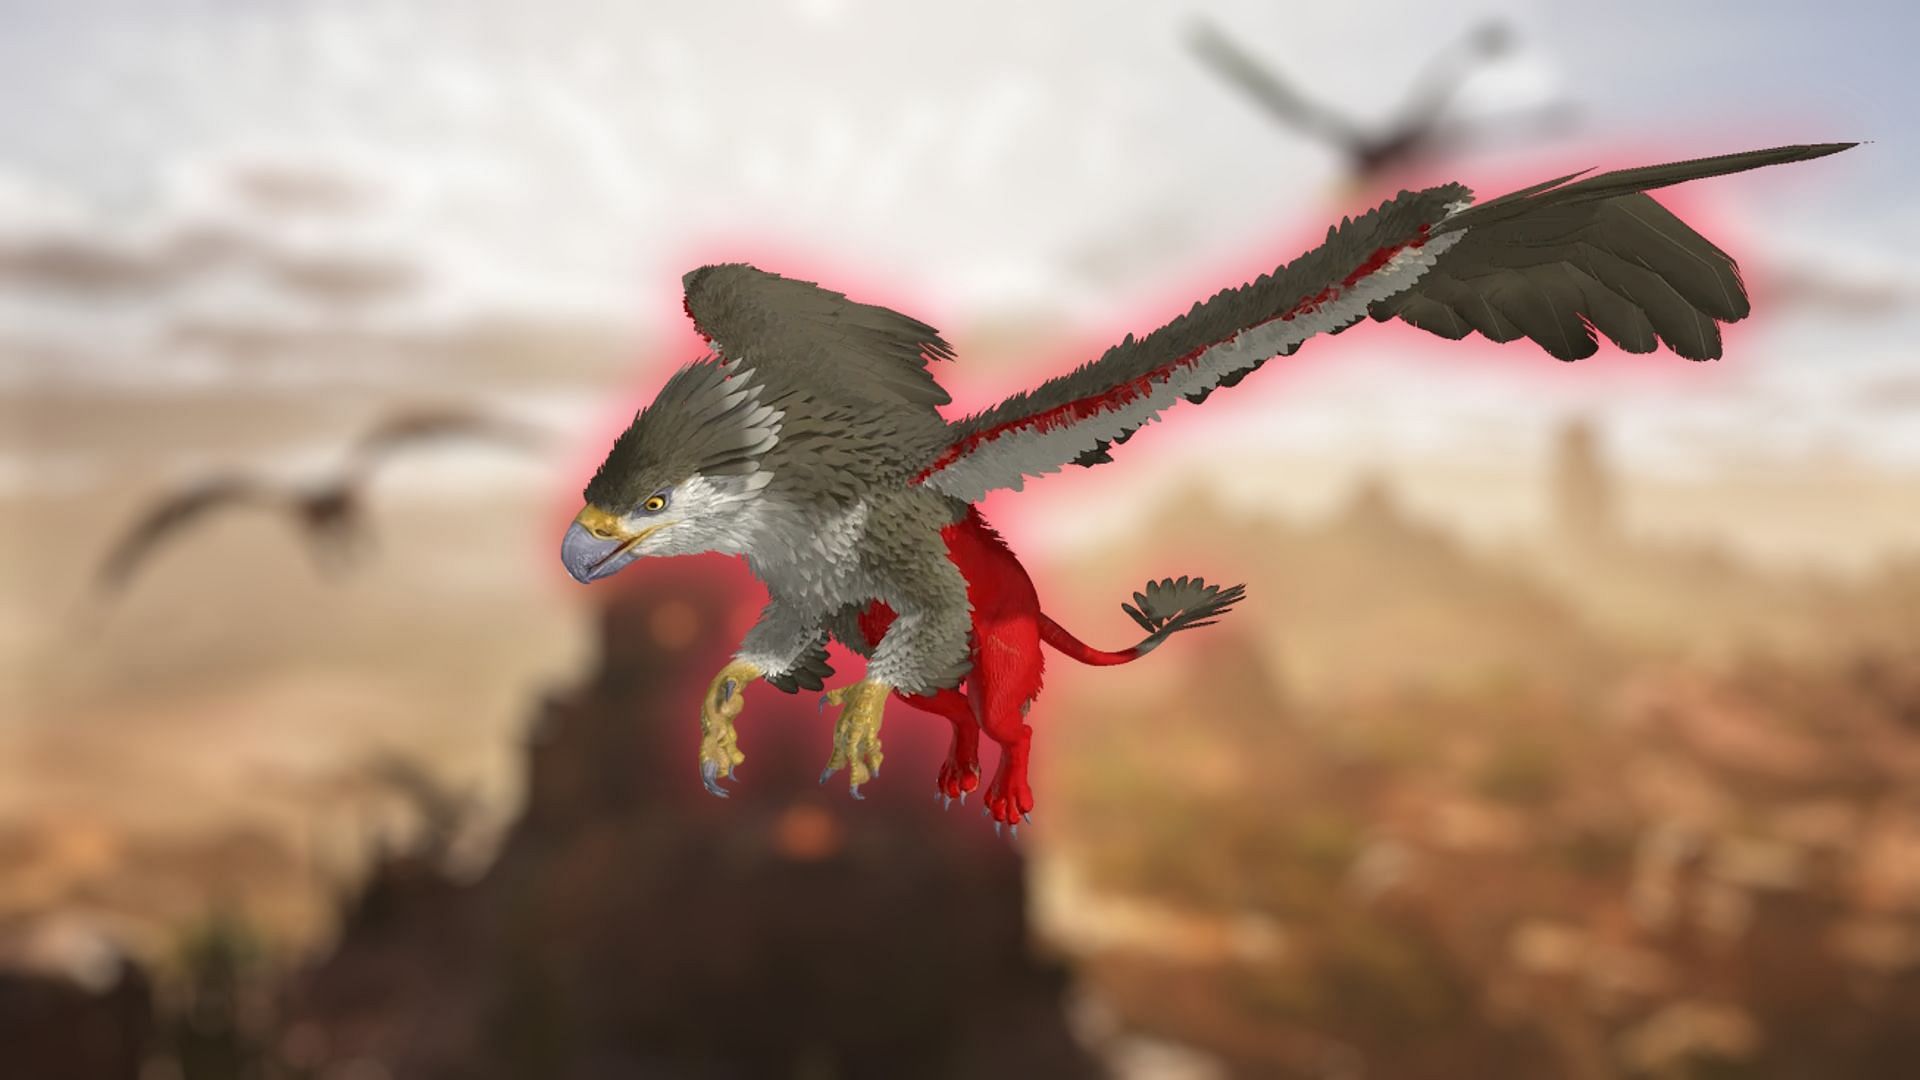 Griffin in Ark Survival Ascended